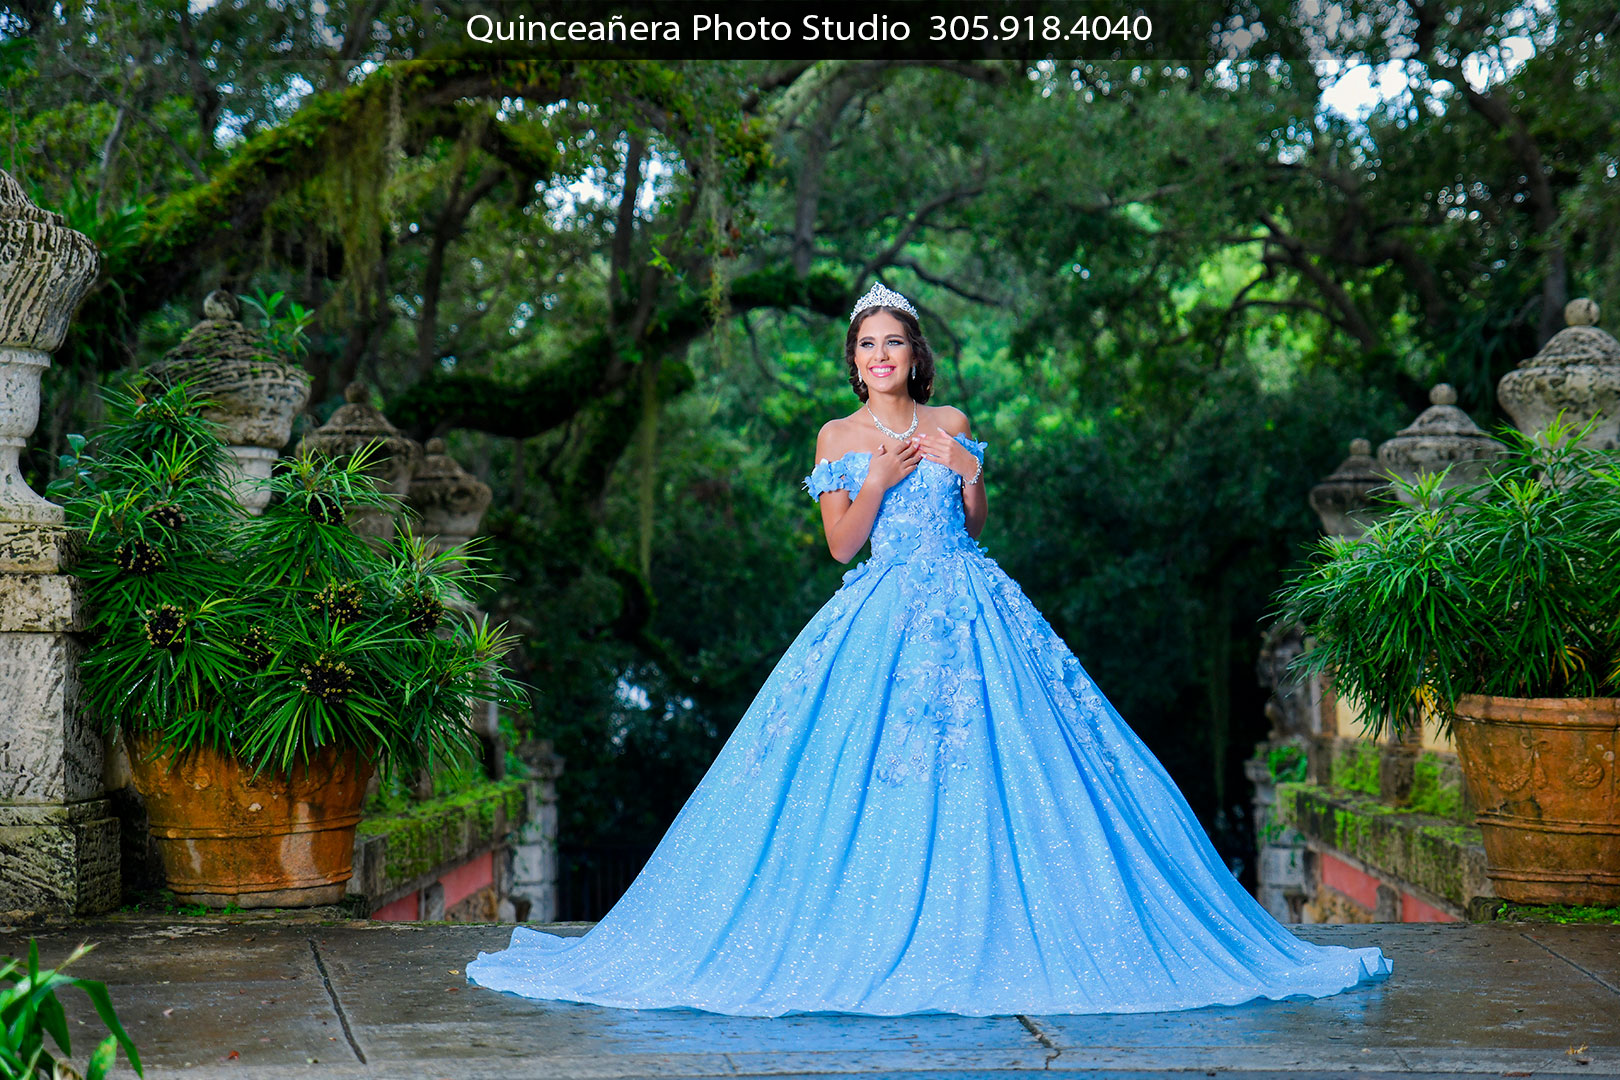 Captivating Quinceañera Photos with a Stunning Blue Dress!